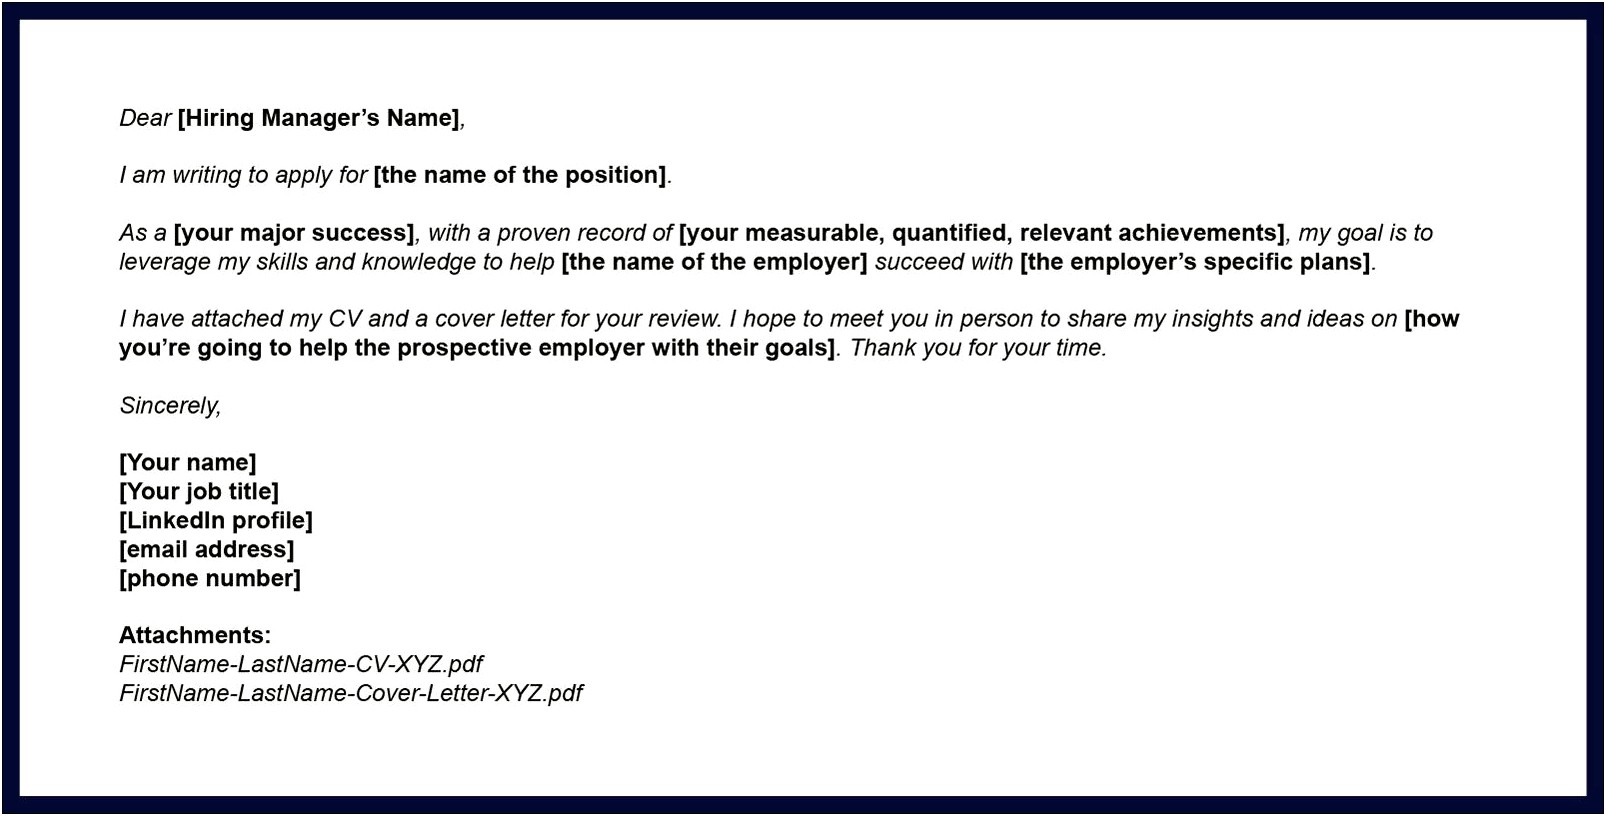 Letter Sernding My Resume To Employer